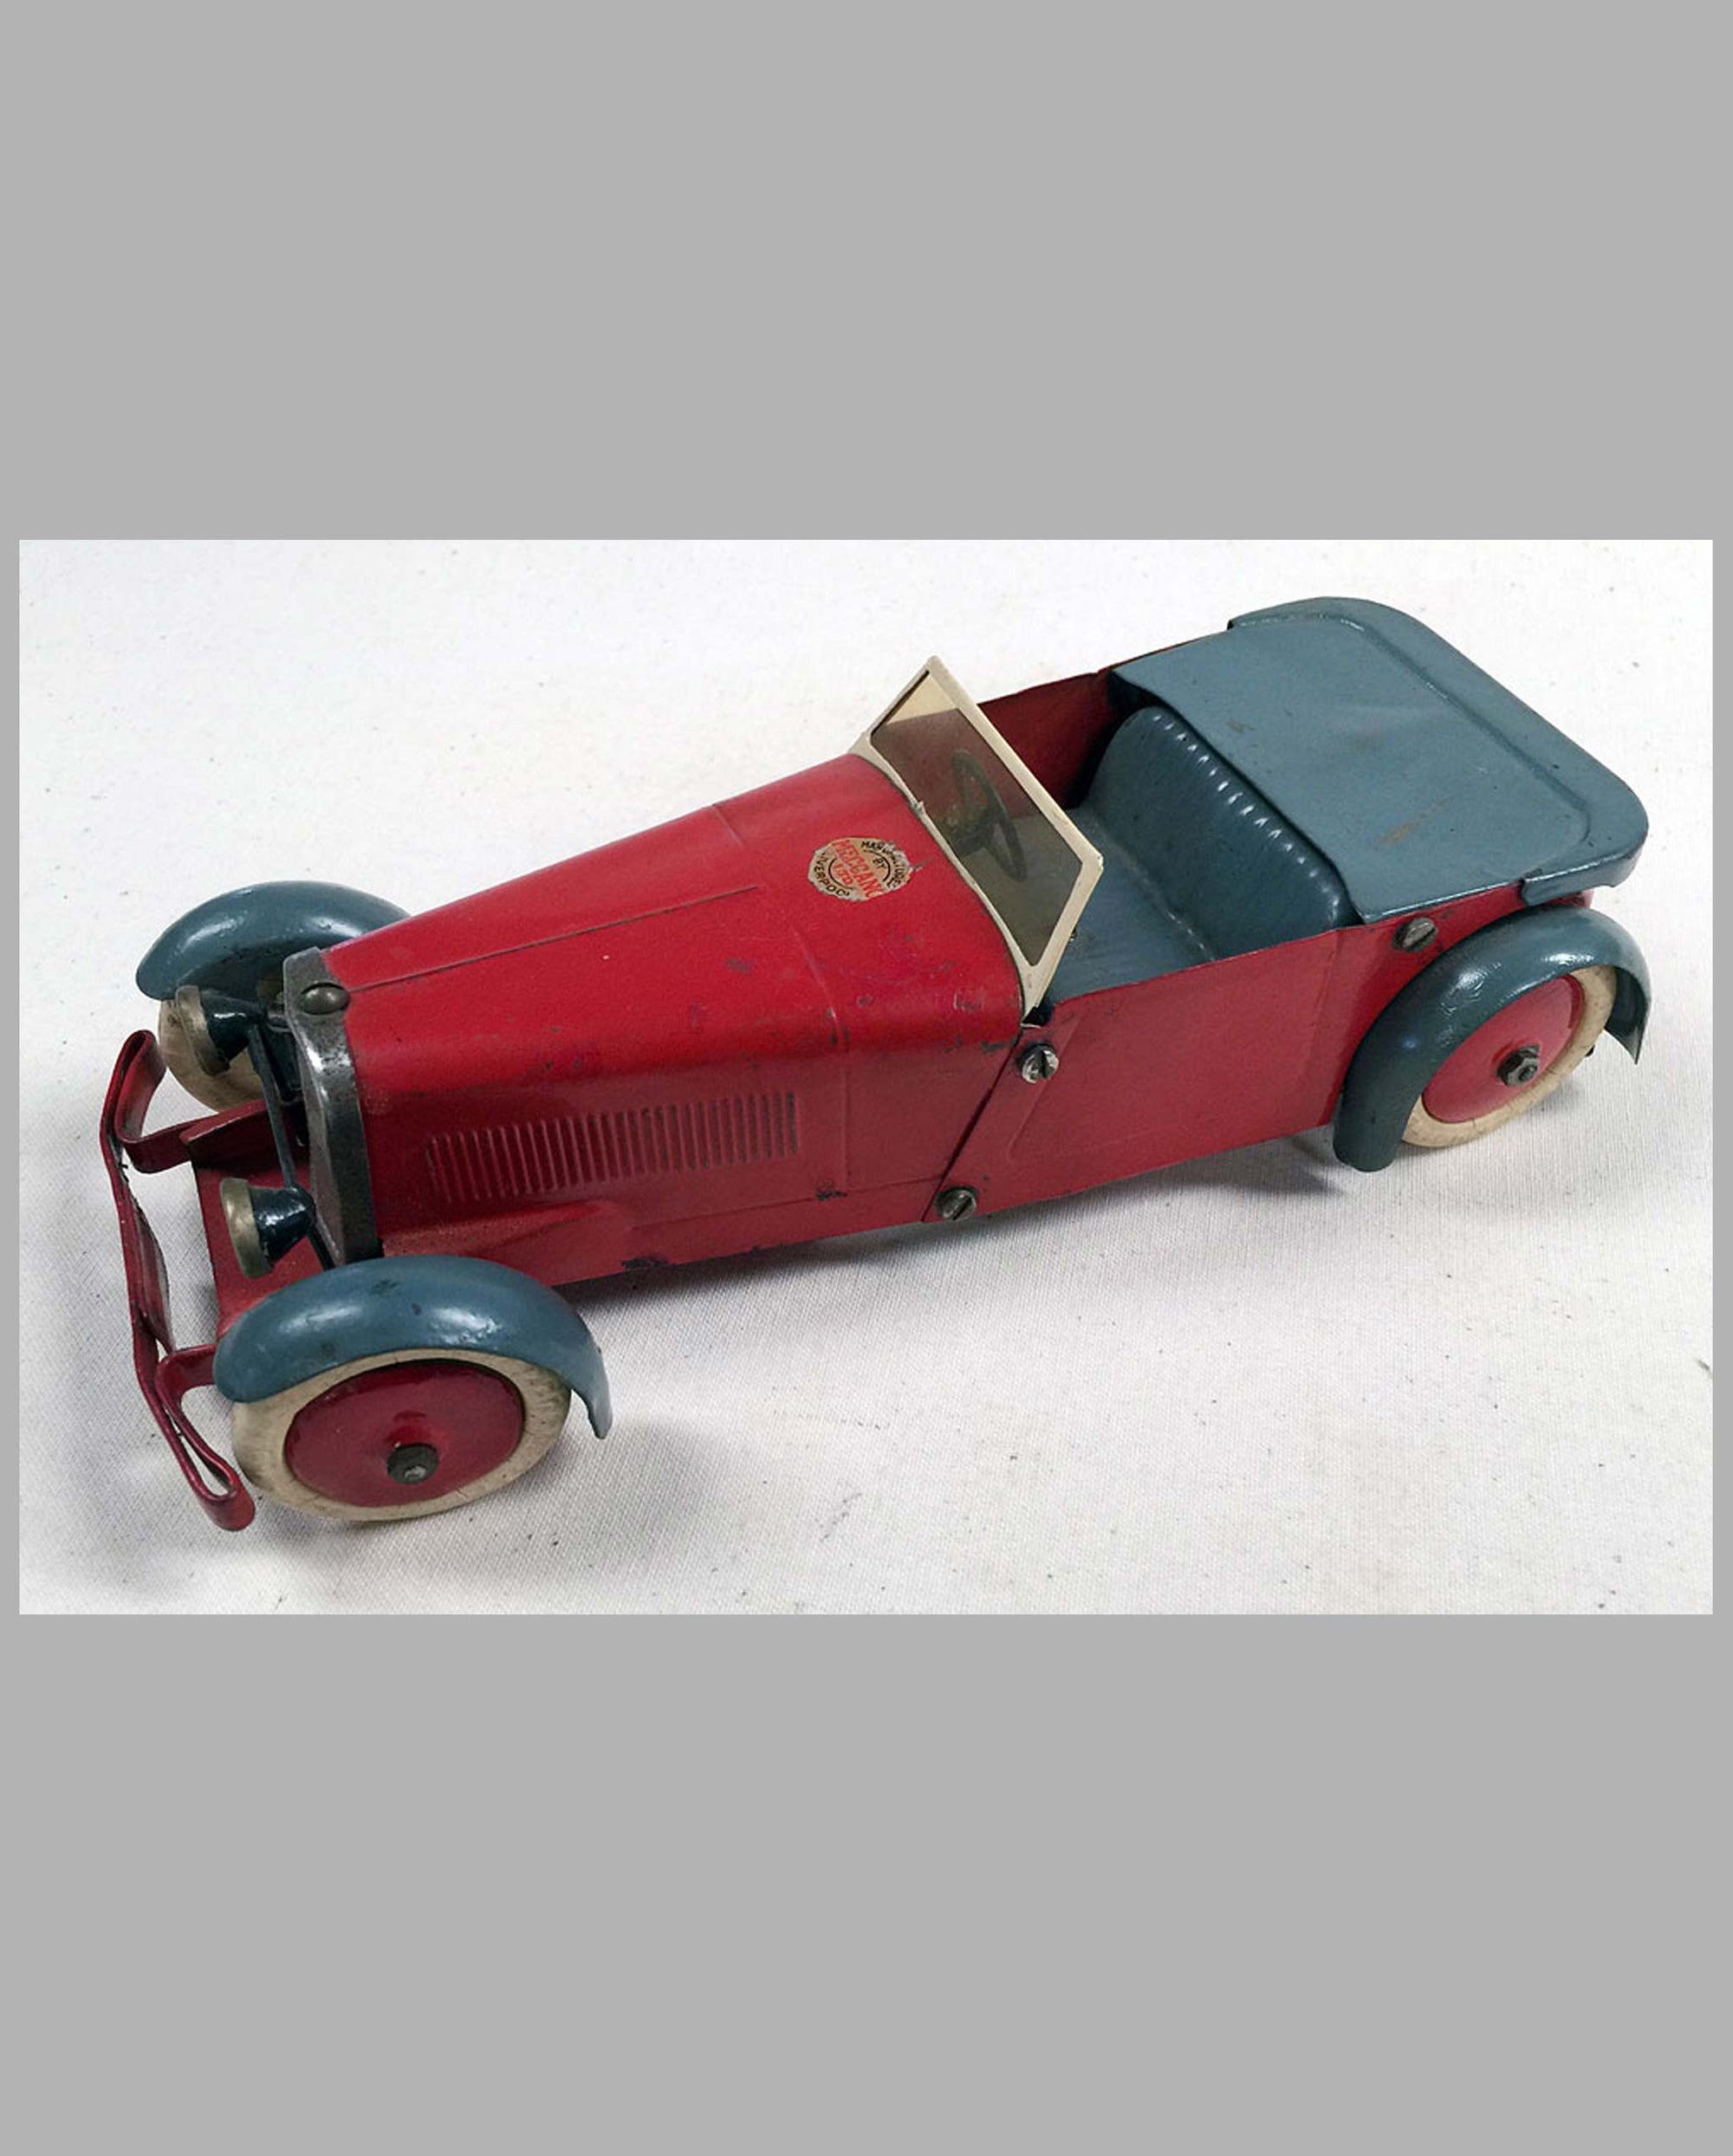 Sports Car toy #1 by Meccano (1932) U.K.